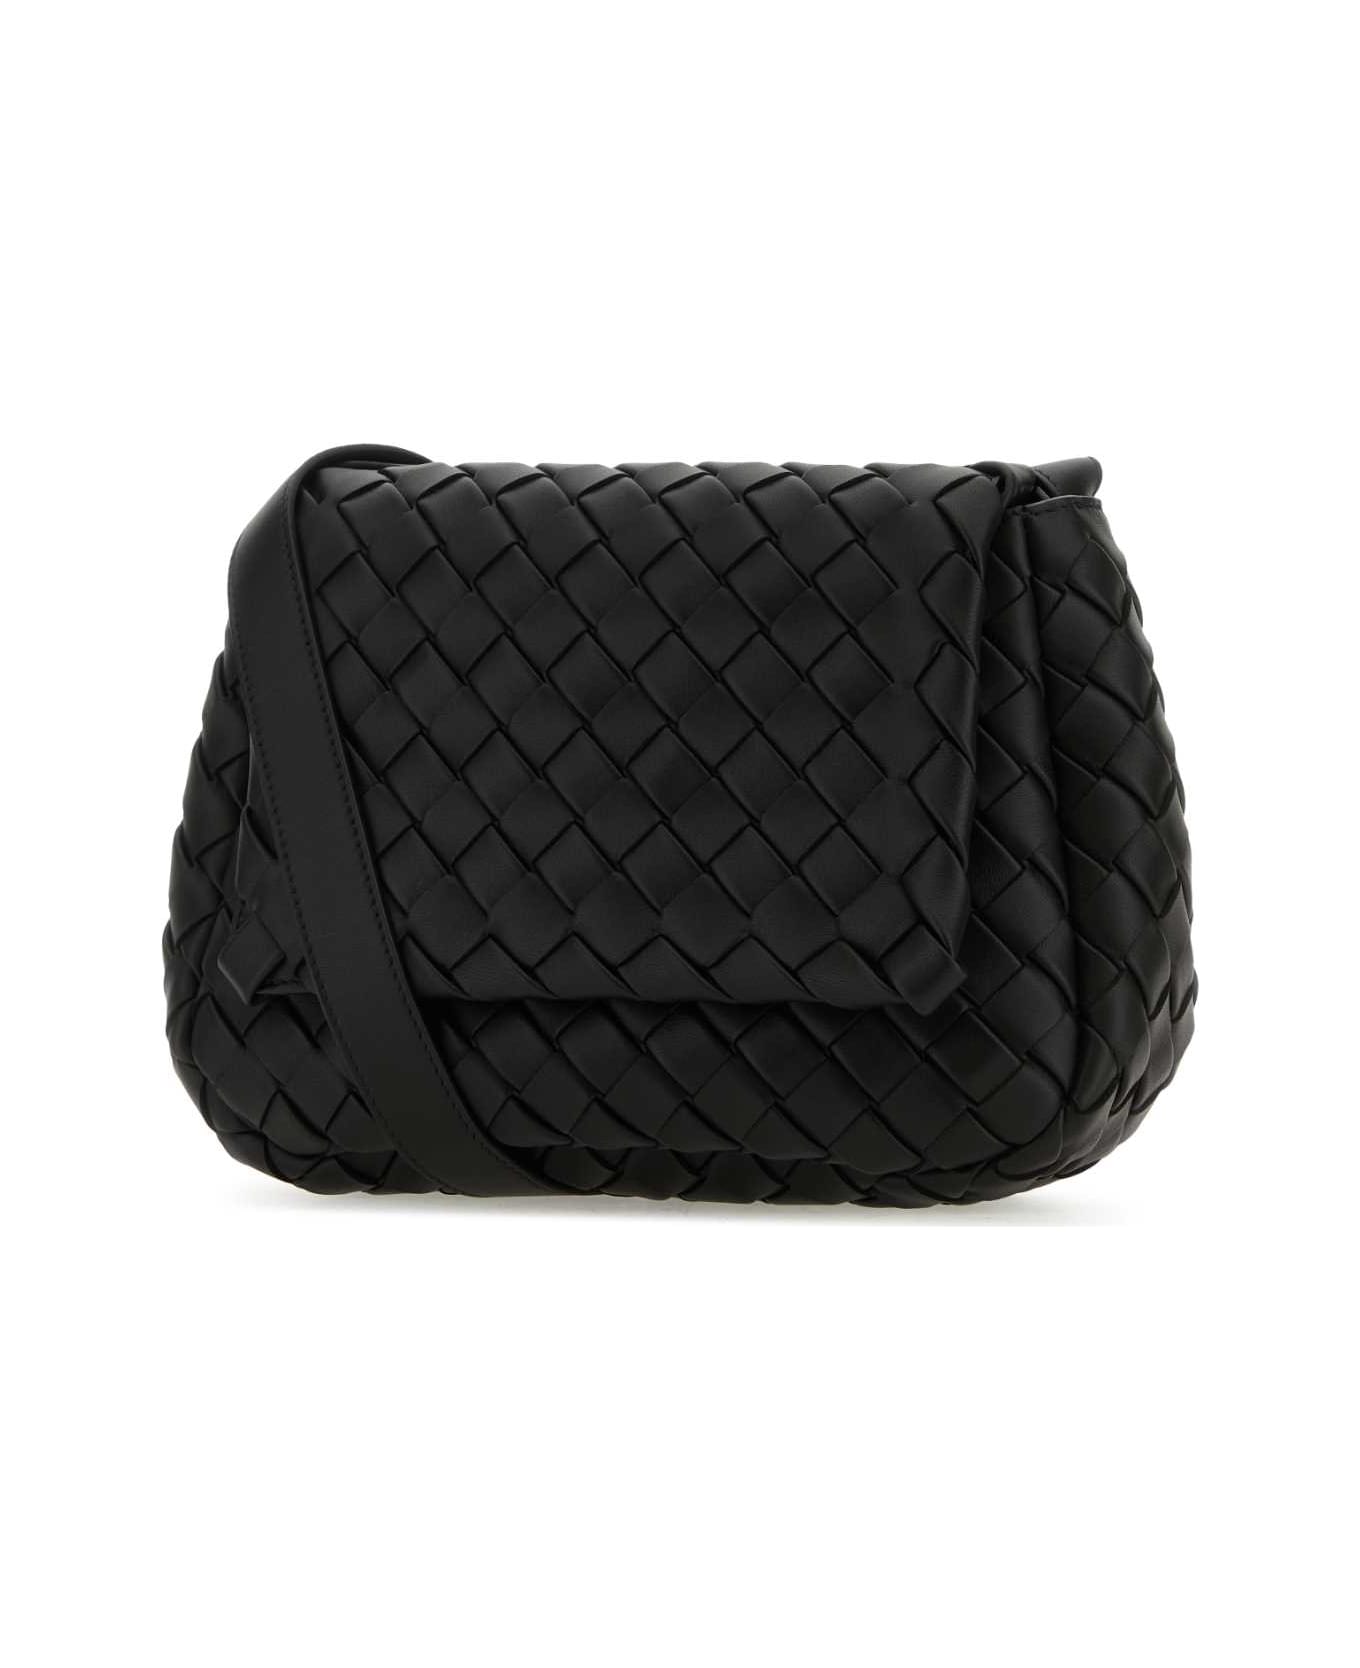 Bottega Veneta Black Leather Small Cobble Crossbody Bag - BLACKSILVER